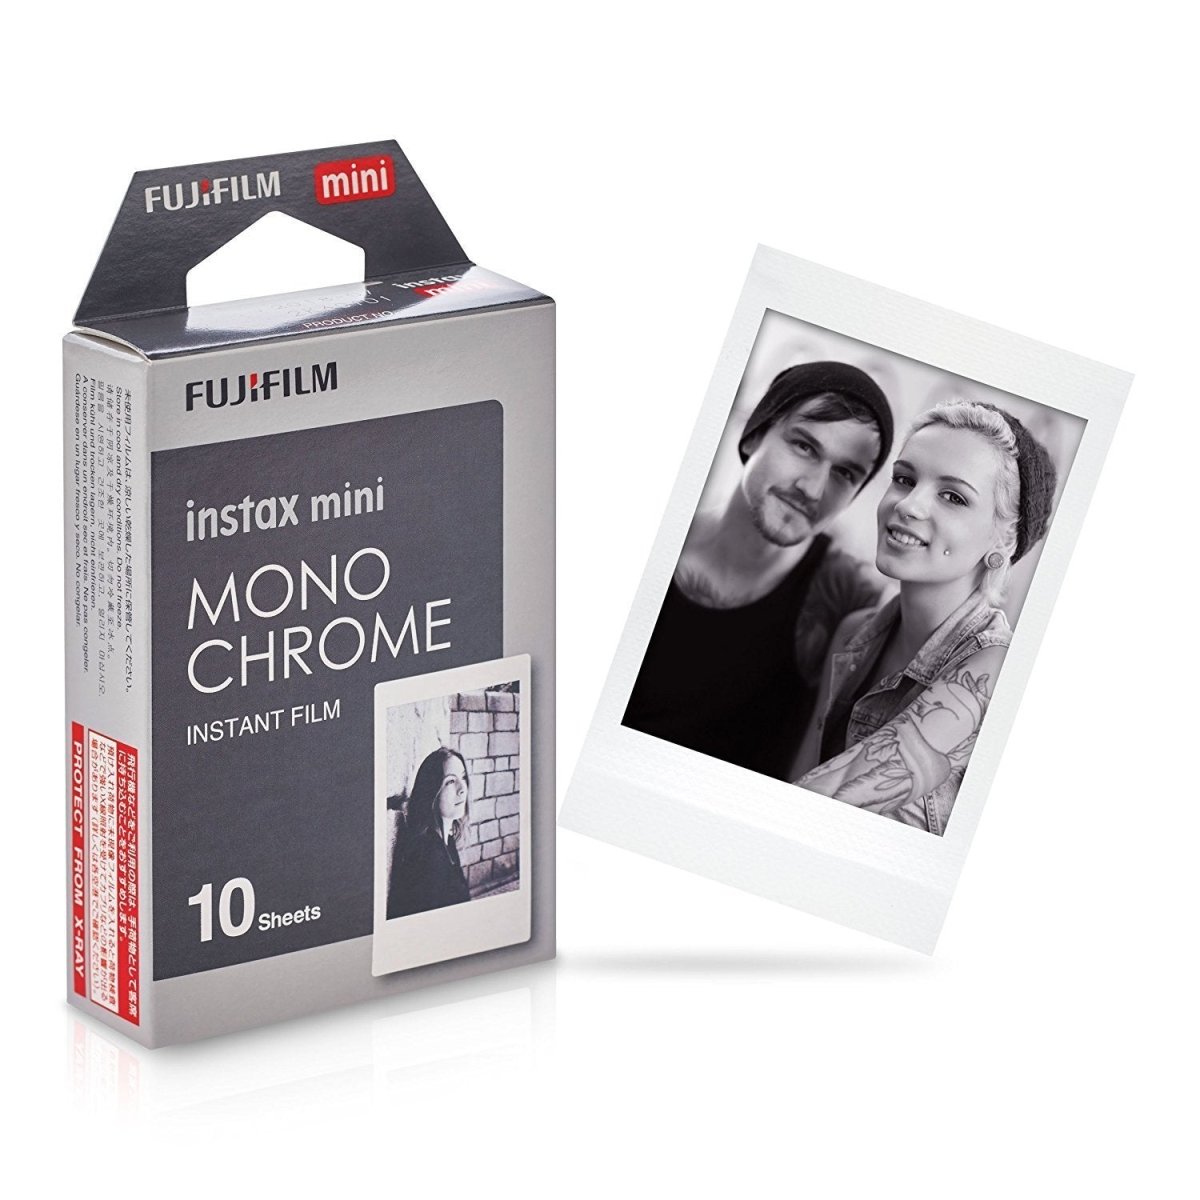 Fujifilm Instax Mini Film (2-Pack) - White 